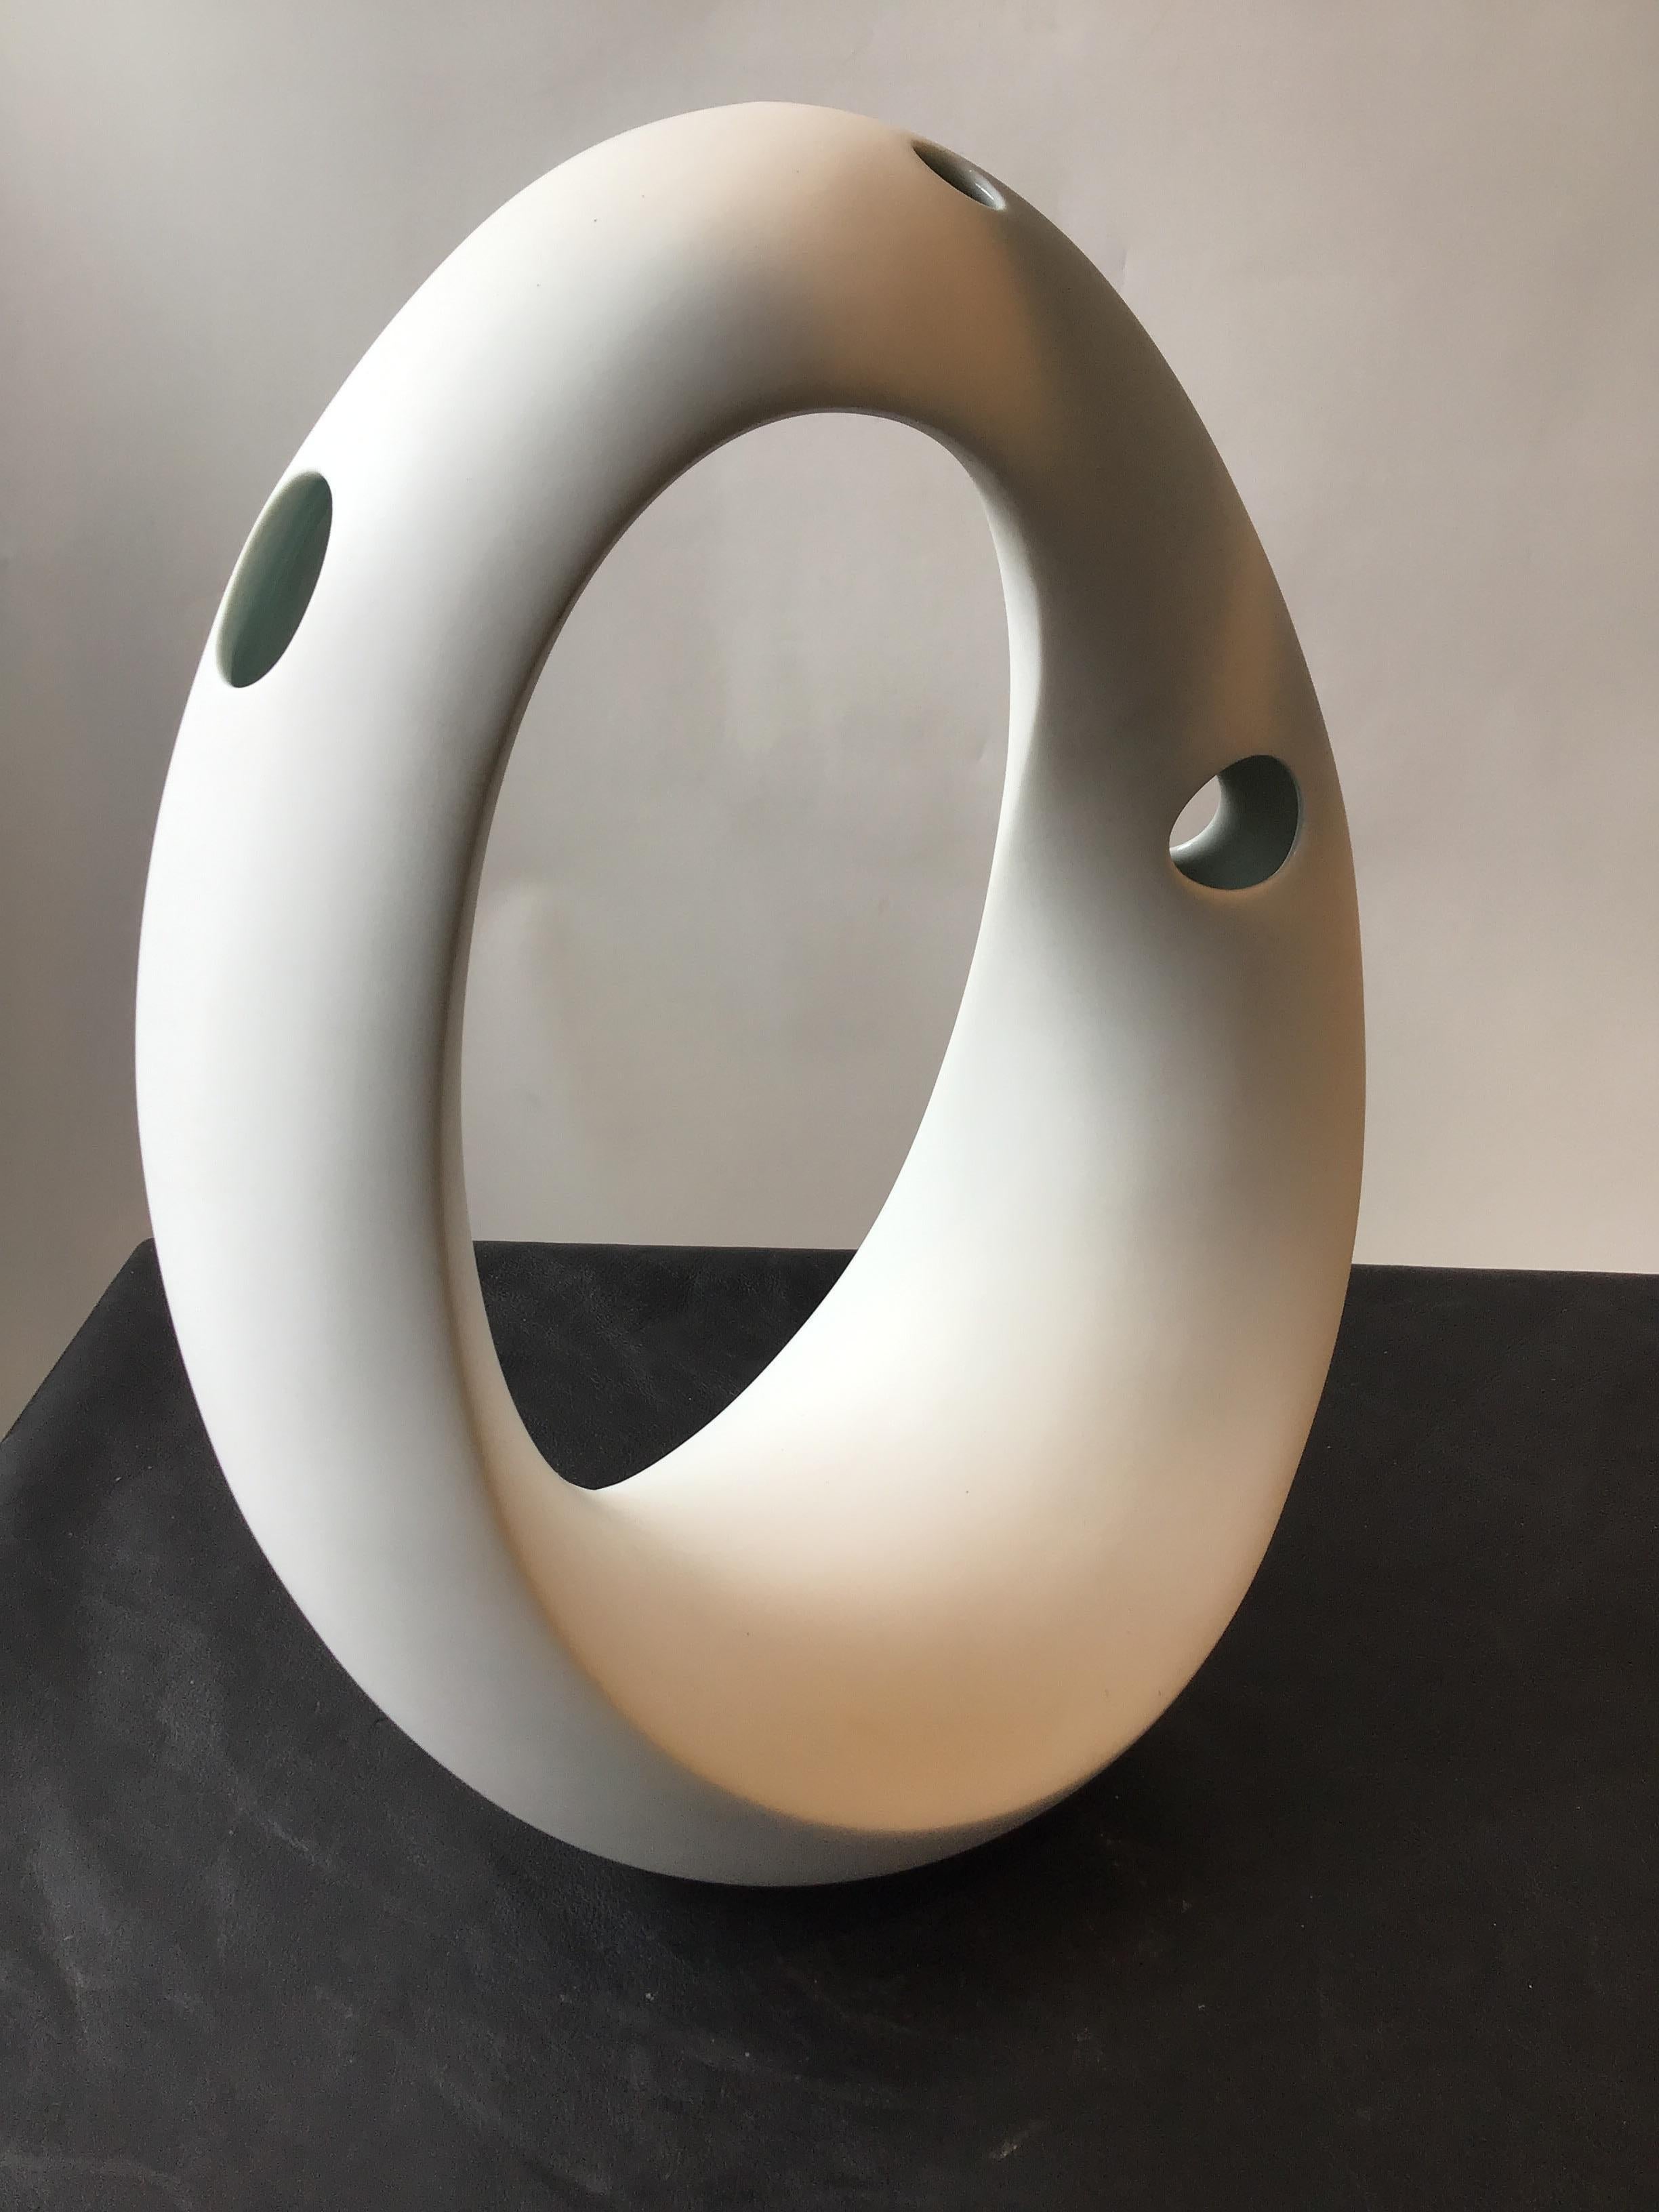 Oval shaped spin ceramics vase. New.